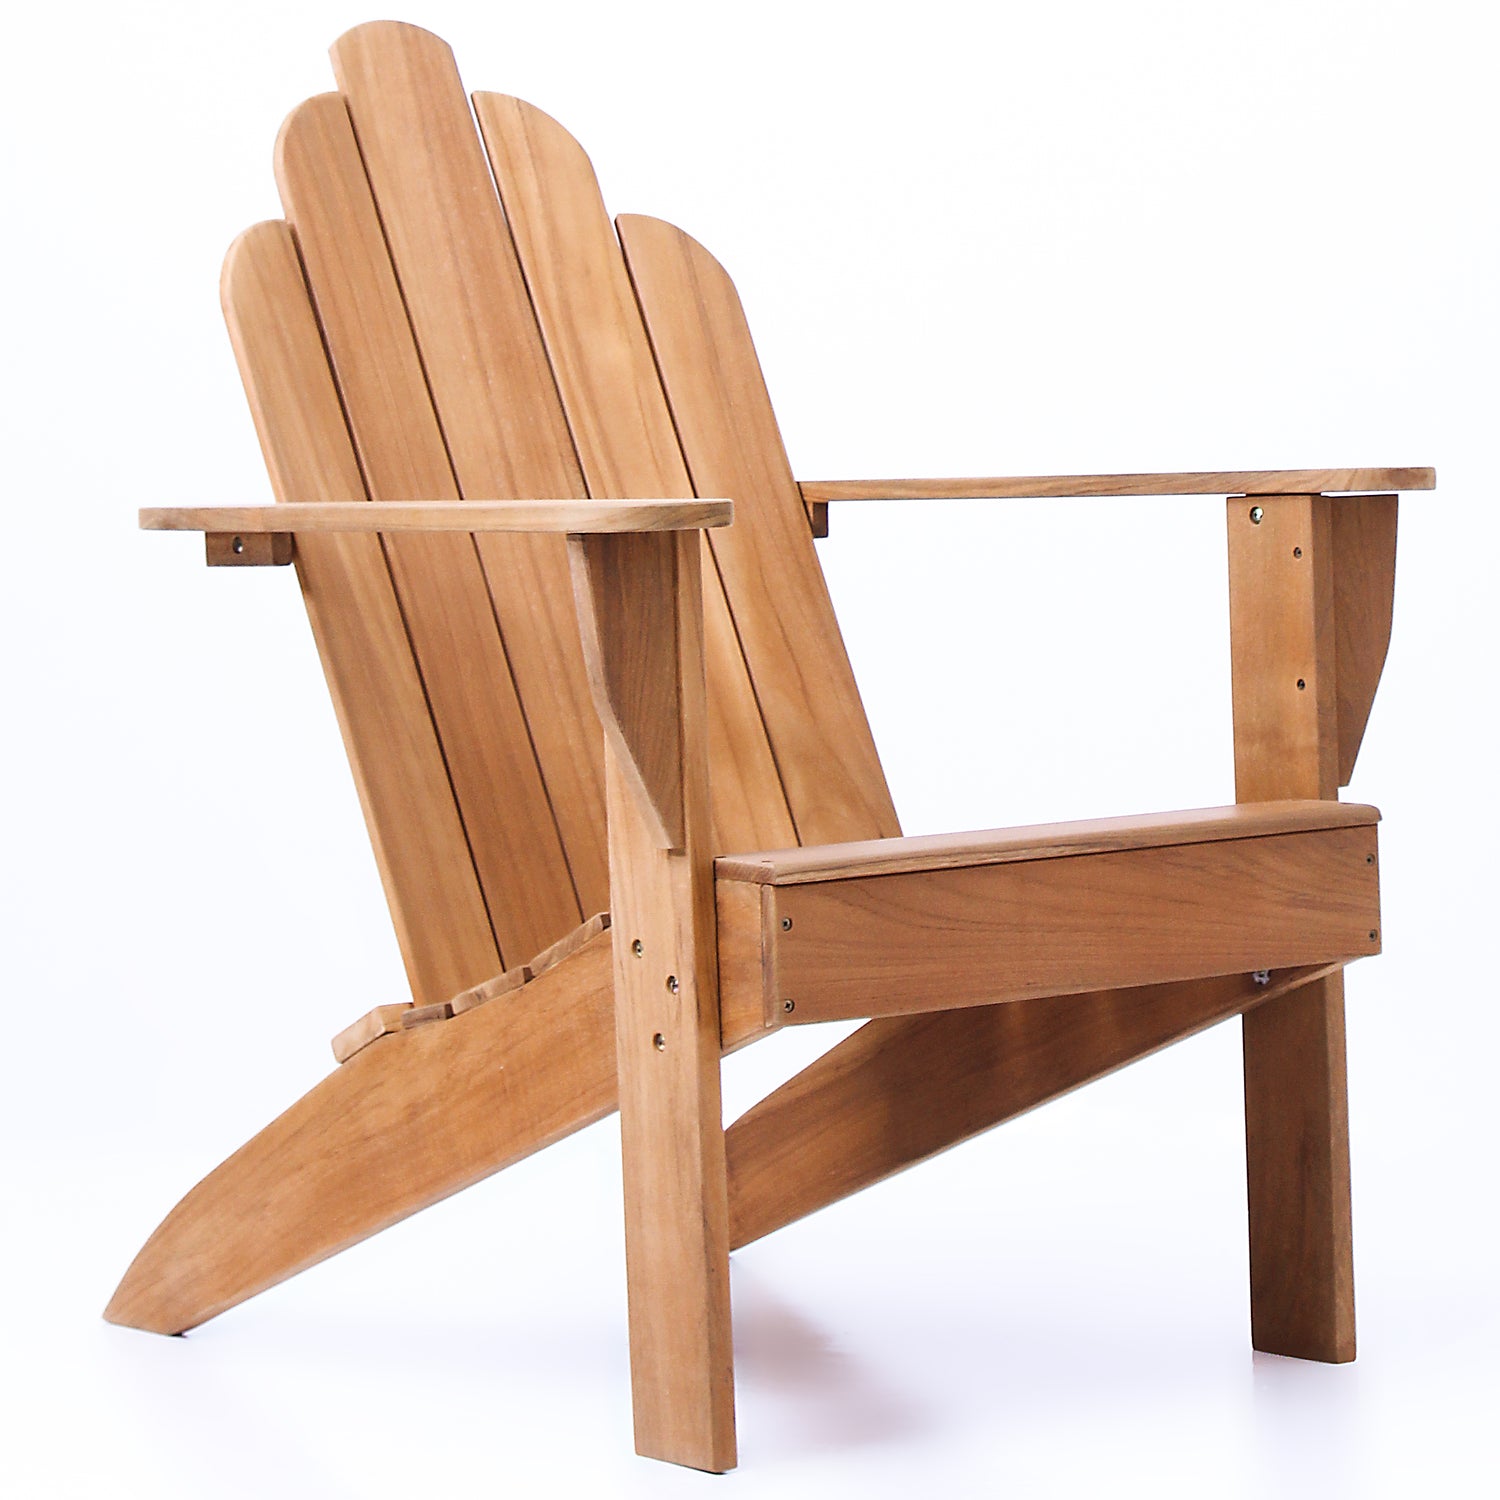 Richmond Teak Wood Adirondack Chair - Cambridge Casual